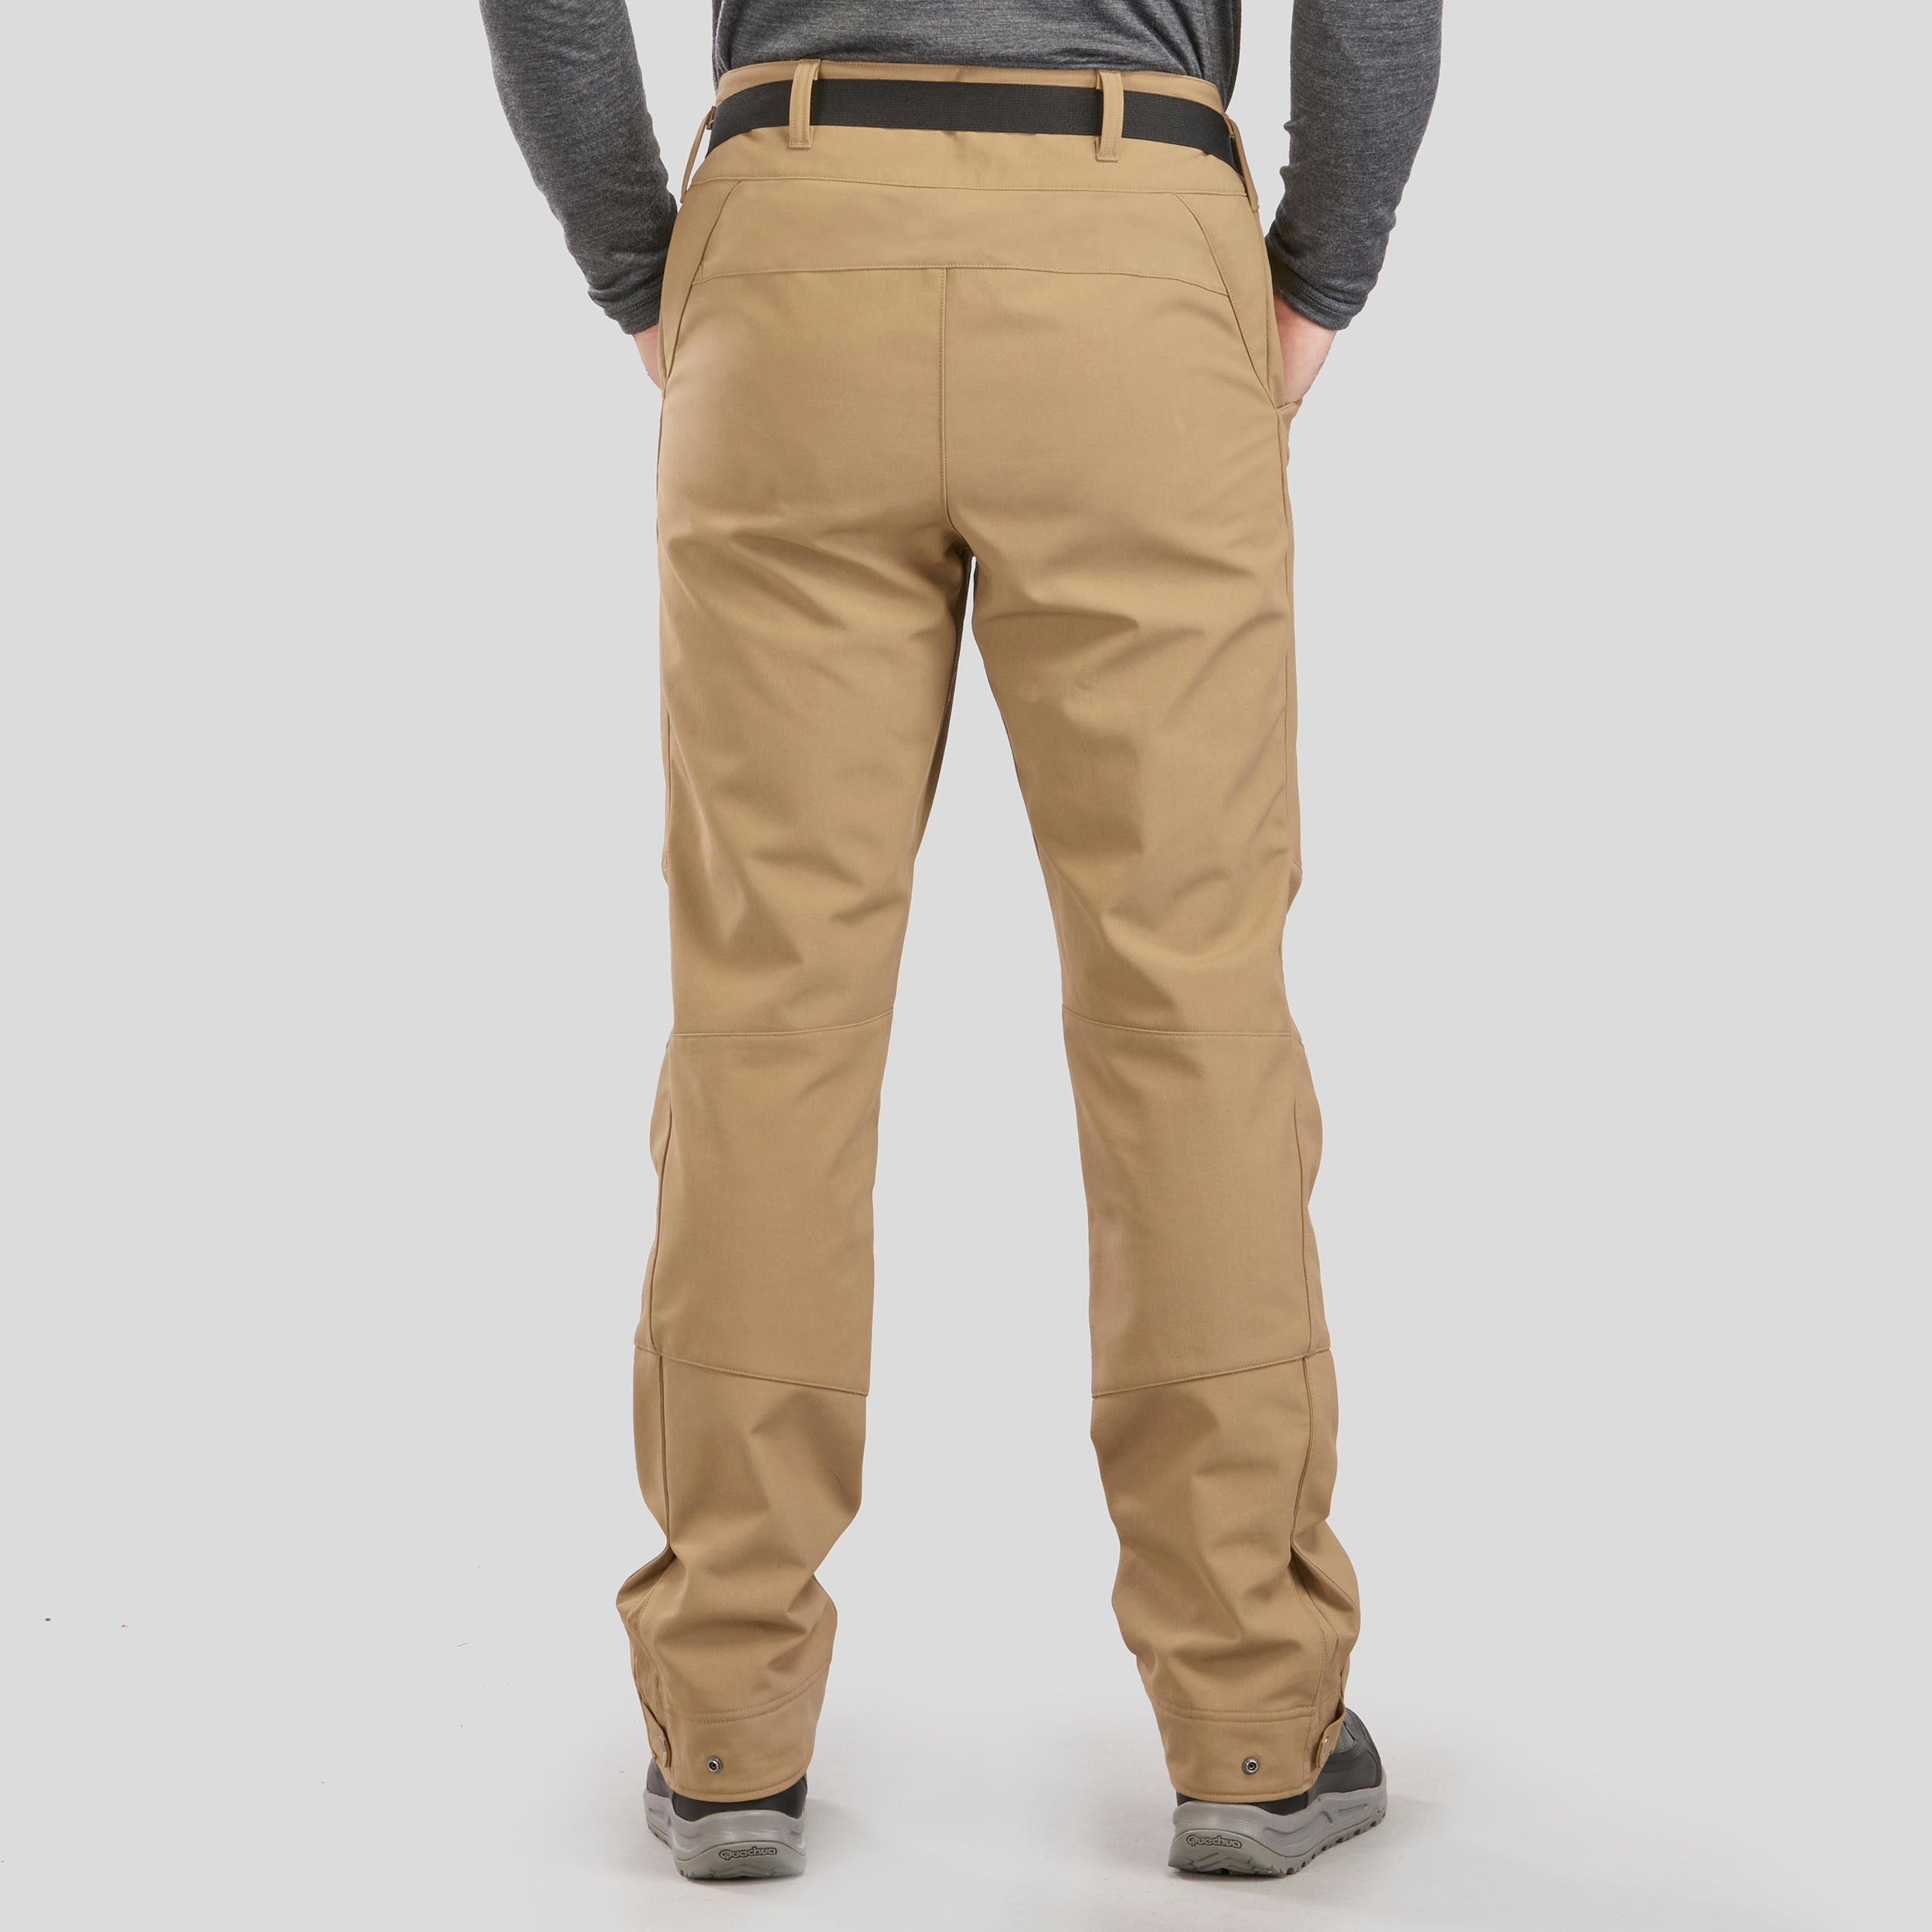 Pantalon chaud homme – SH 500 brun